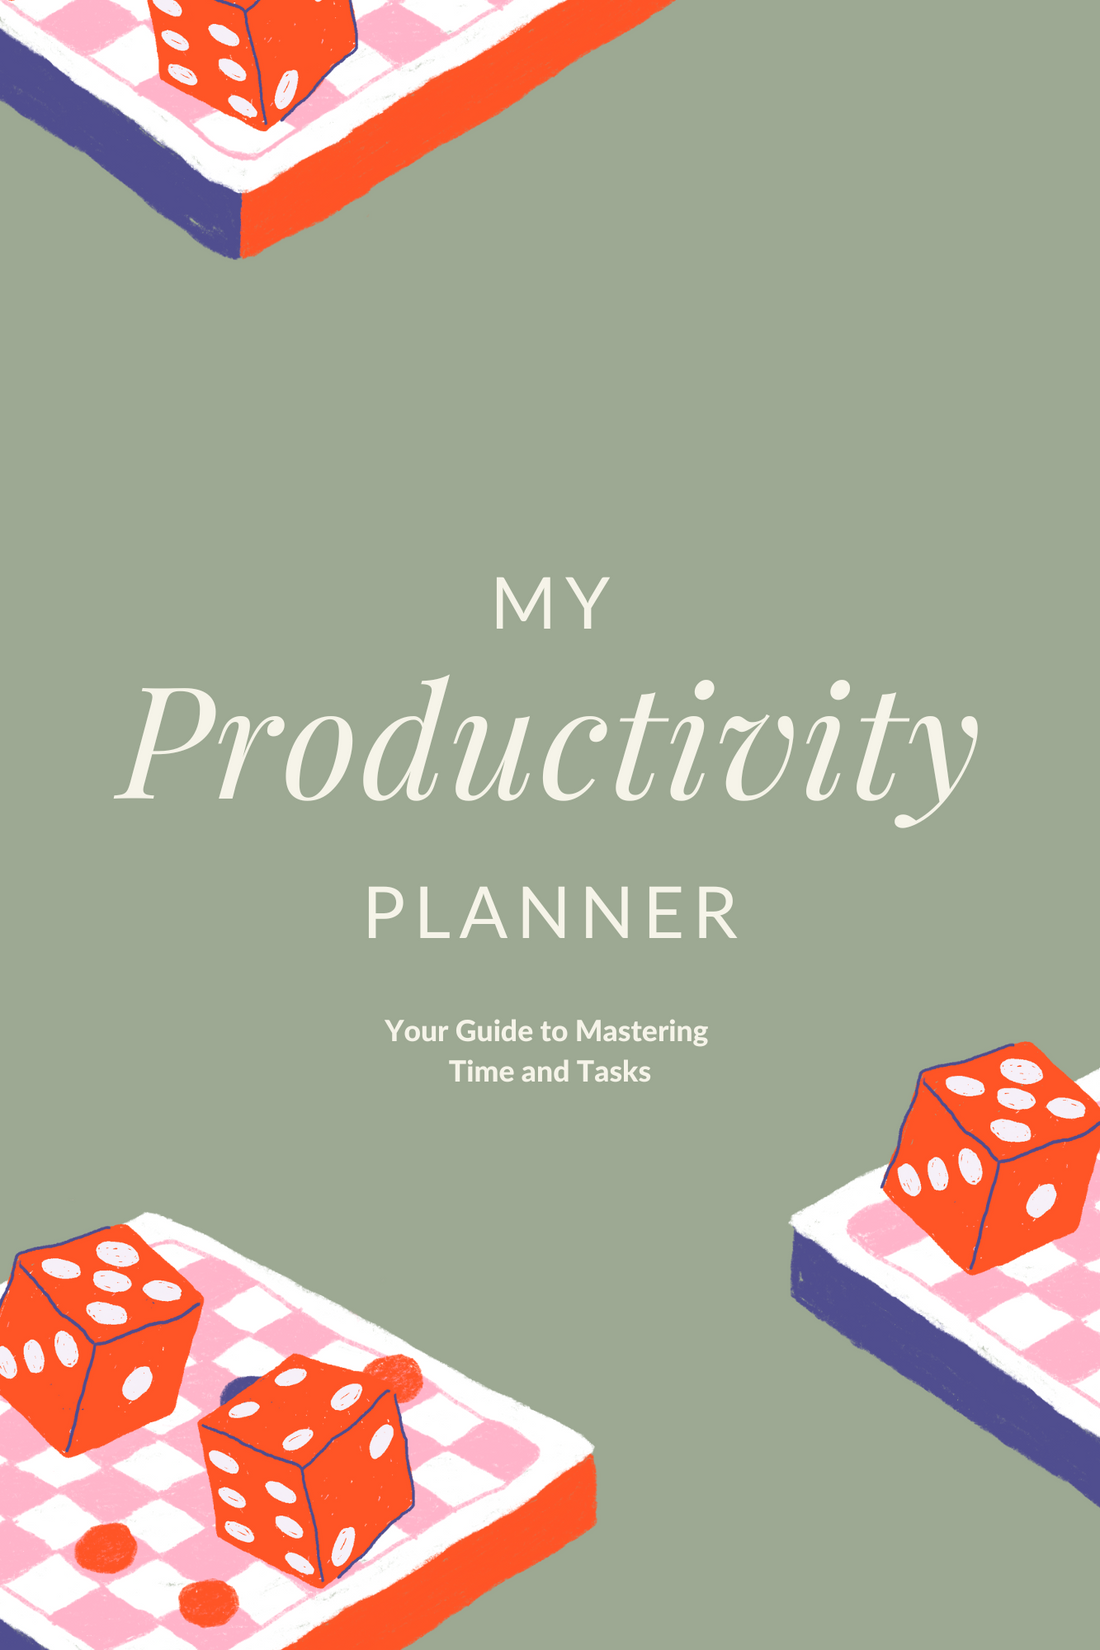 My Productivity Planner